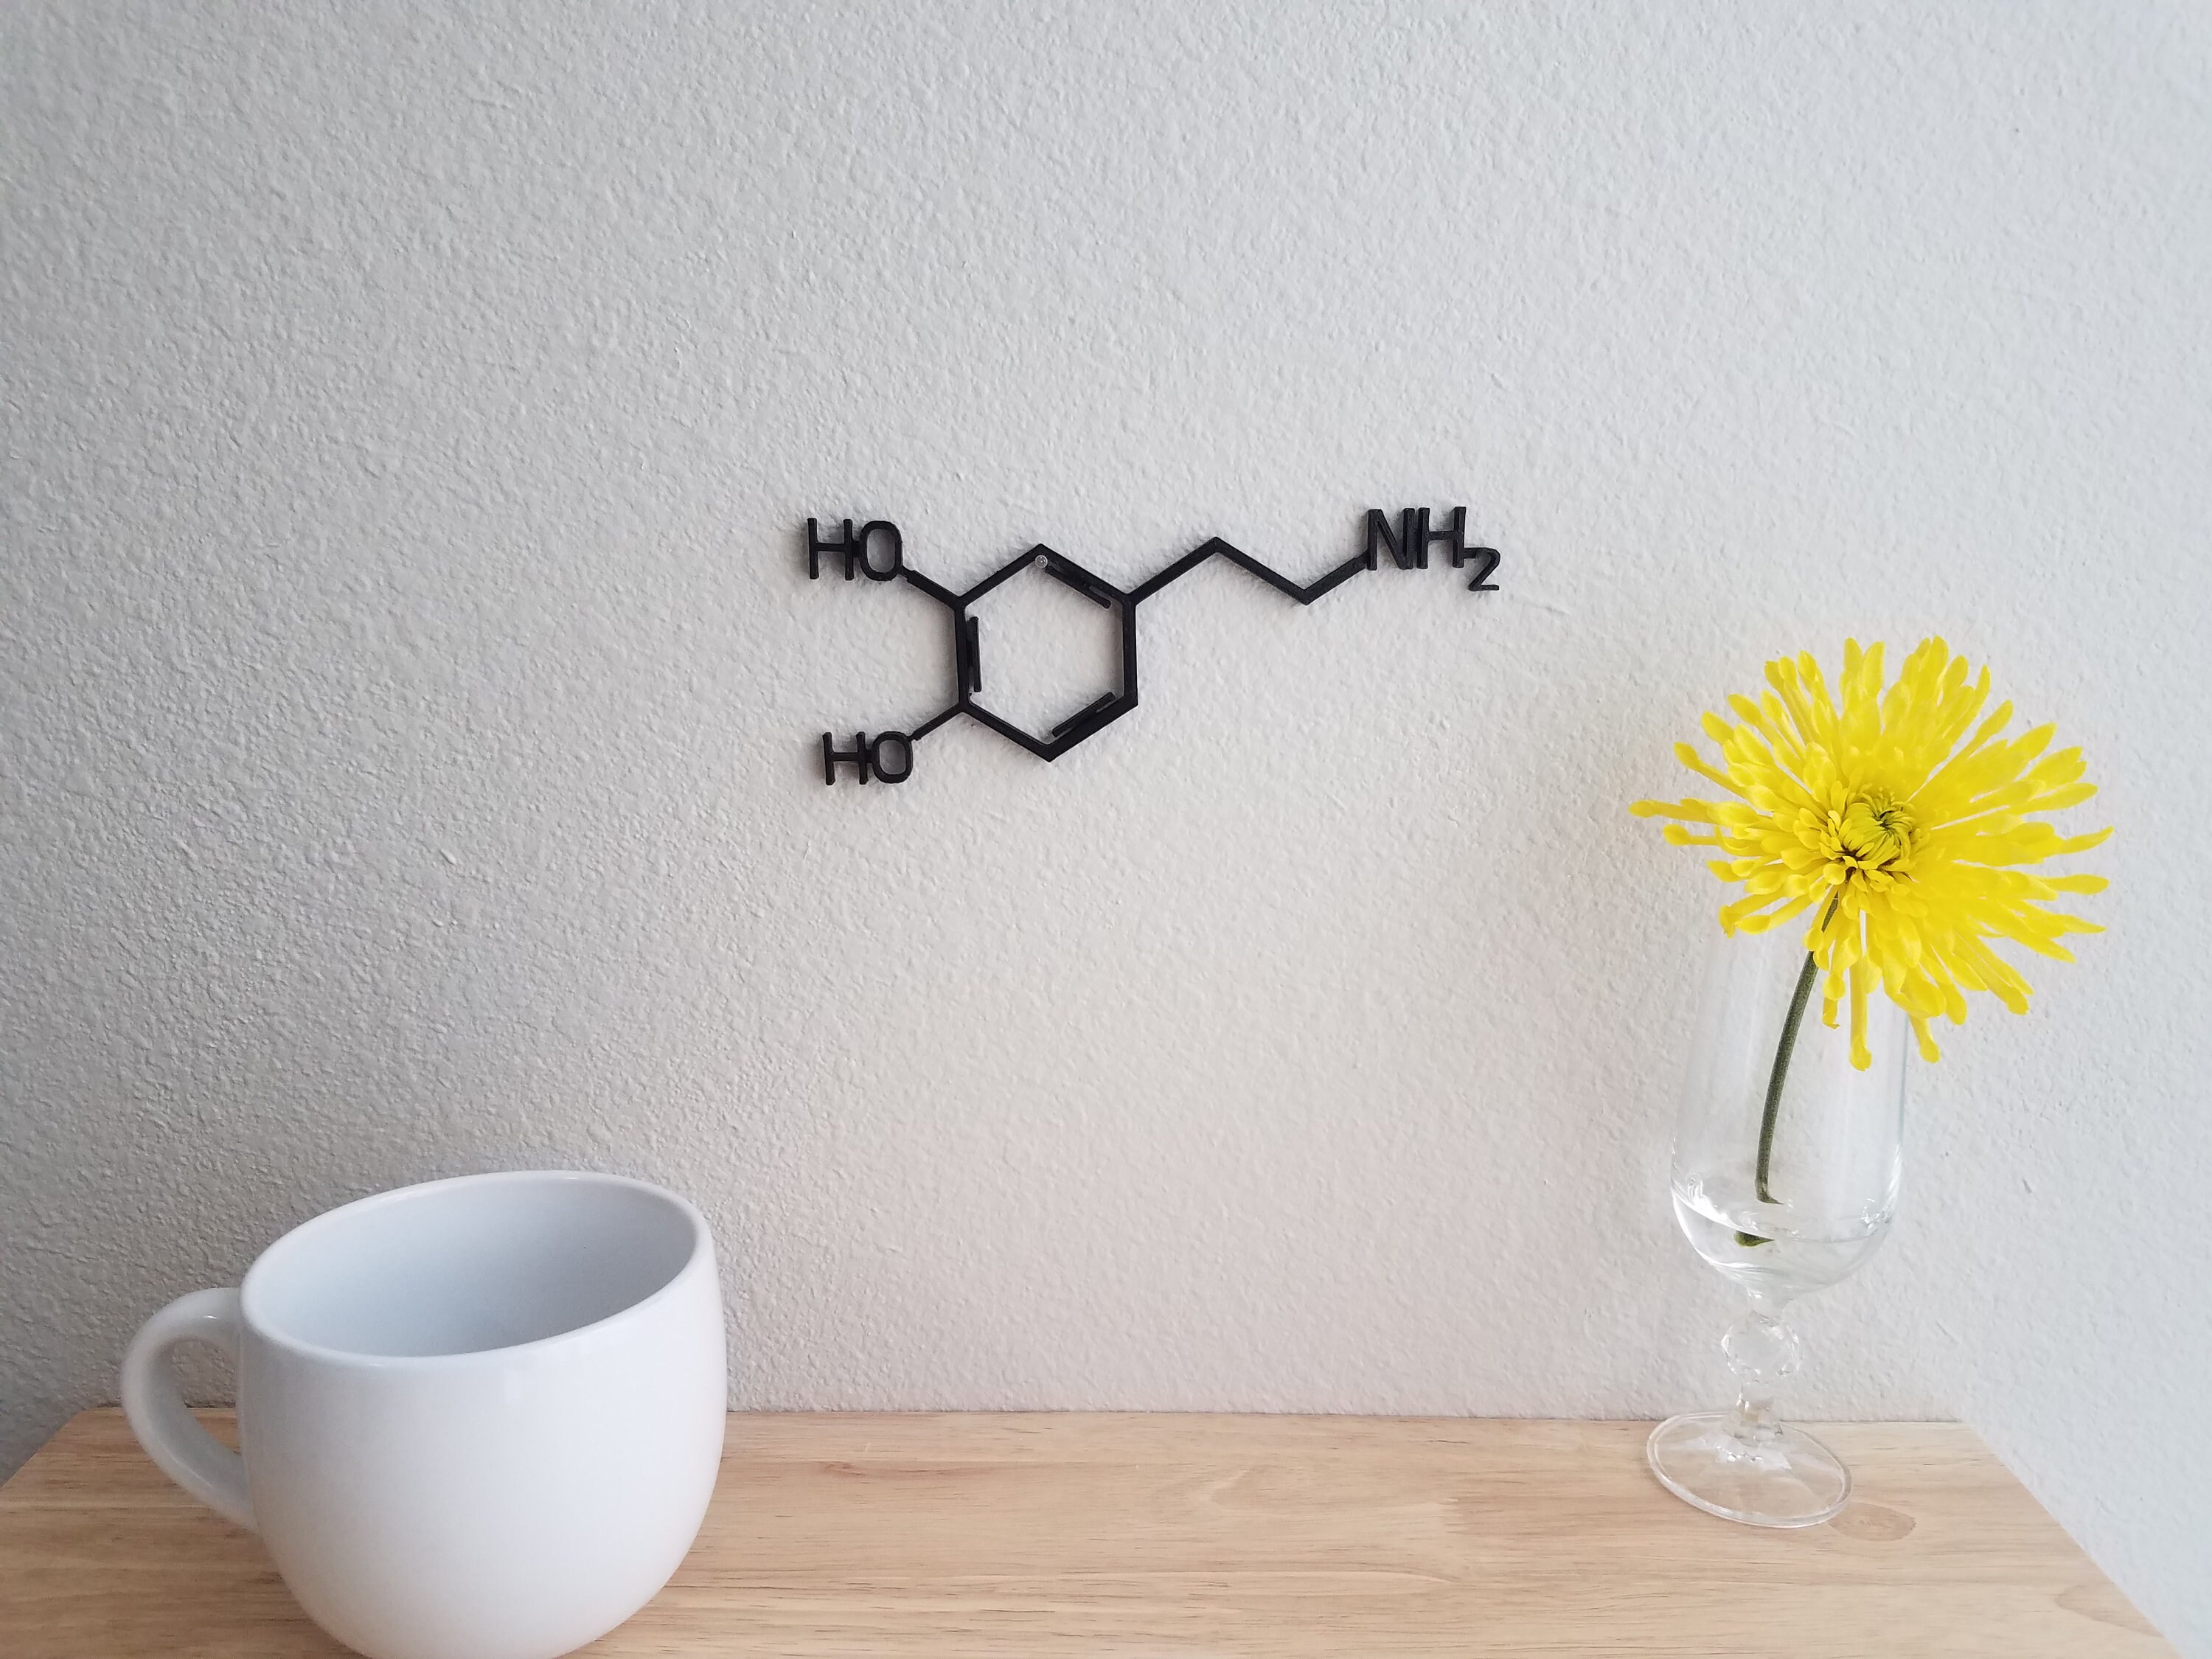 Wall Art of the Dopamine Molecule